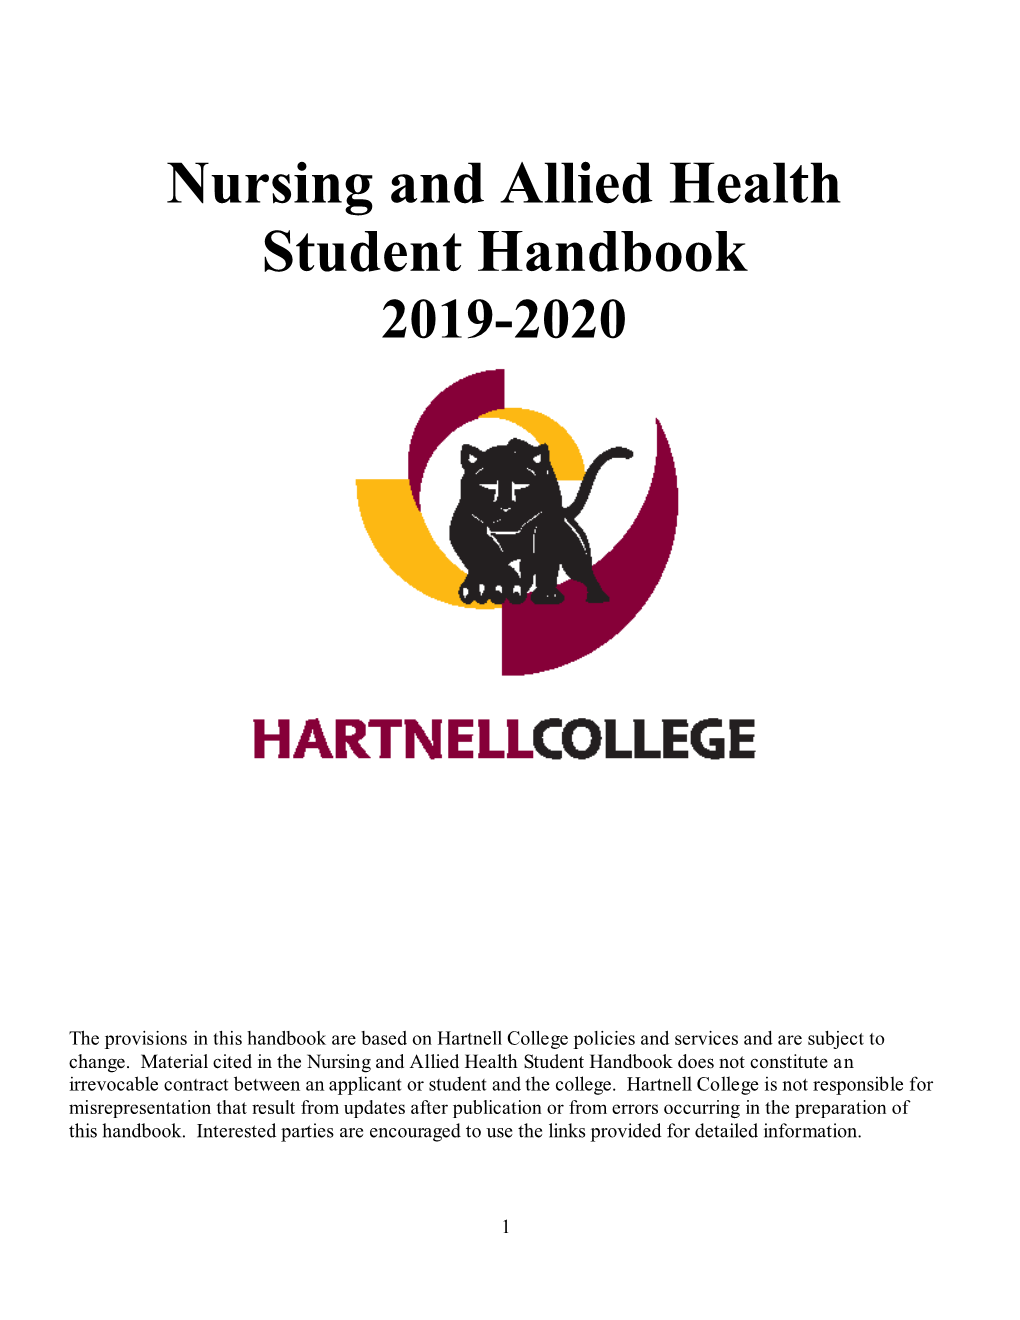 Nursing and Allied Health Student Handbook